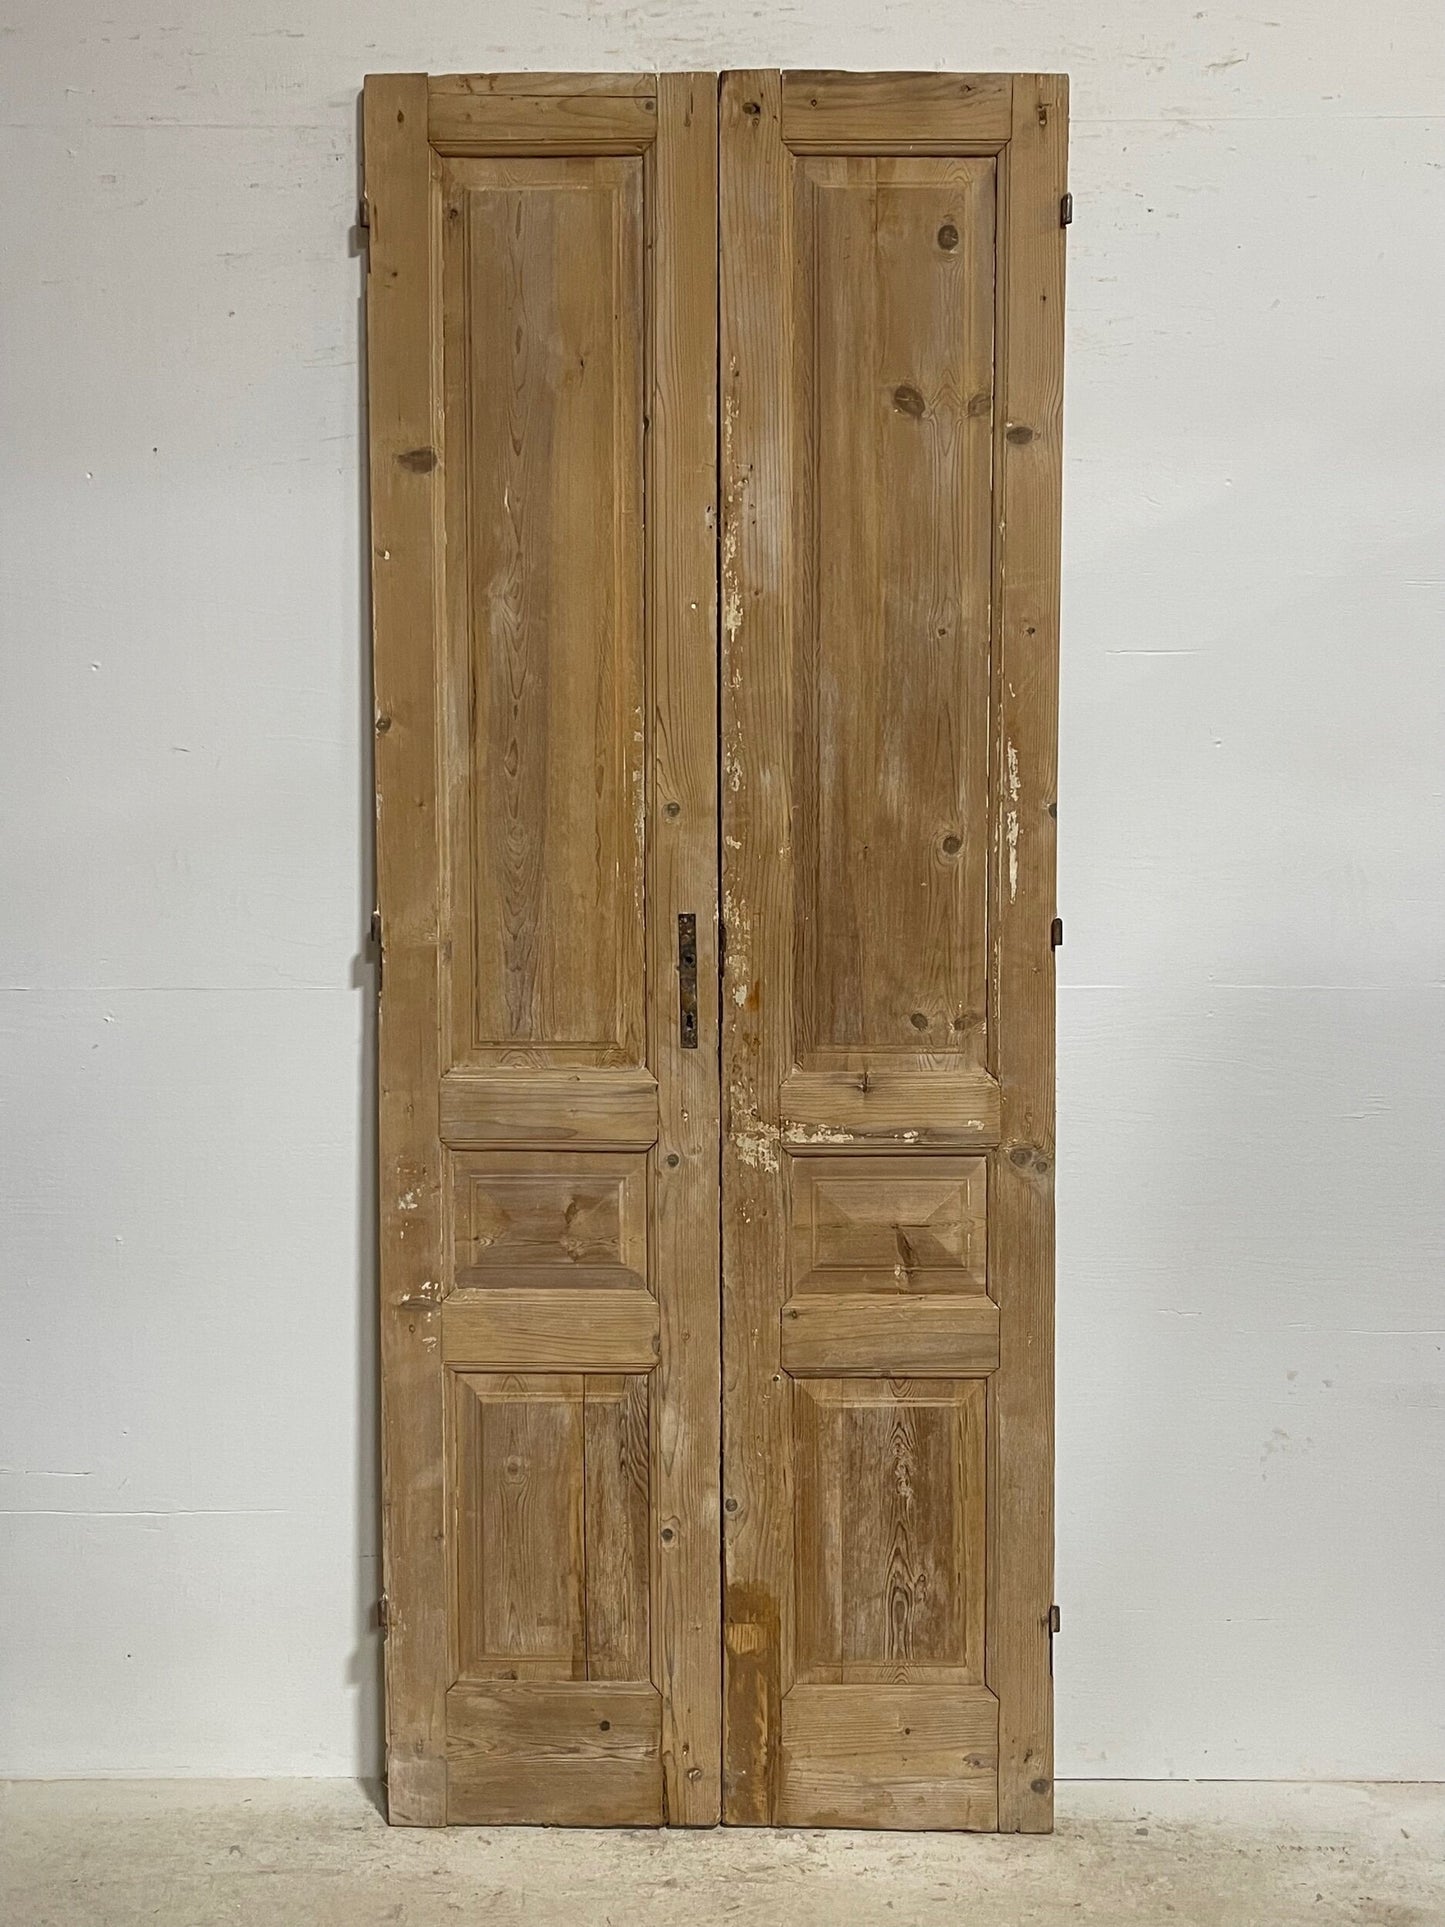 Antique French doors (98.25x38.5) H0134s